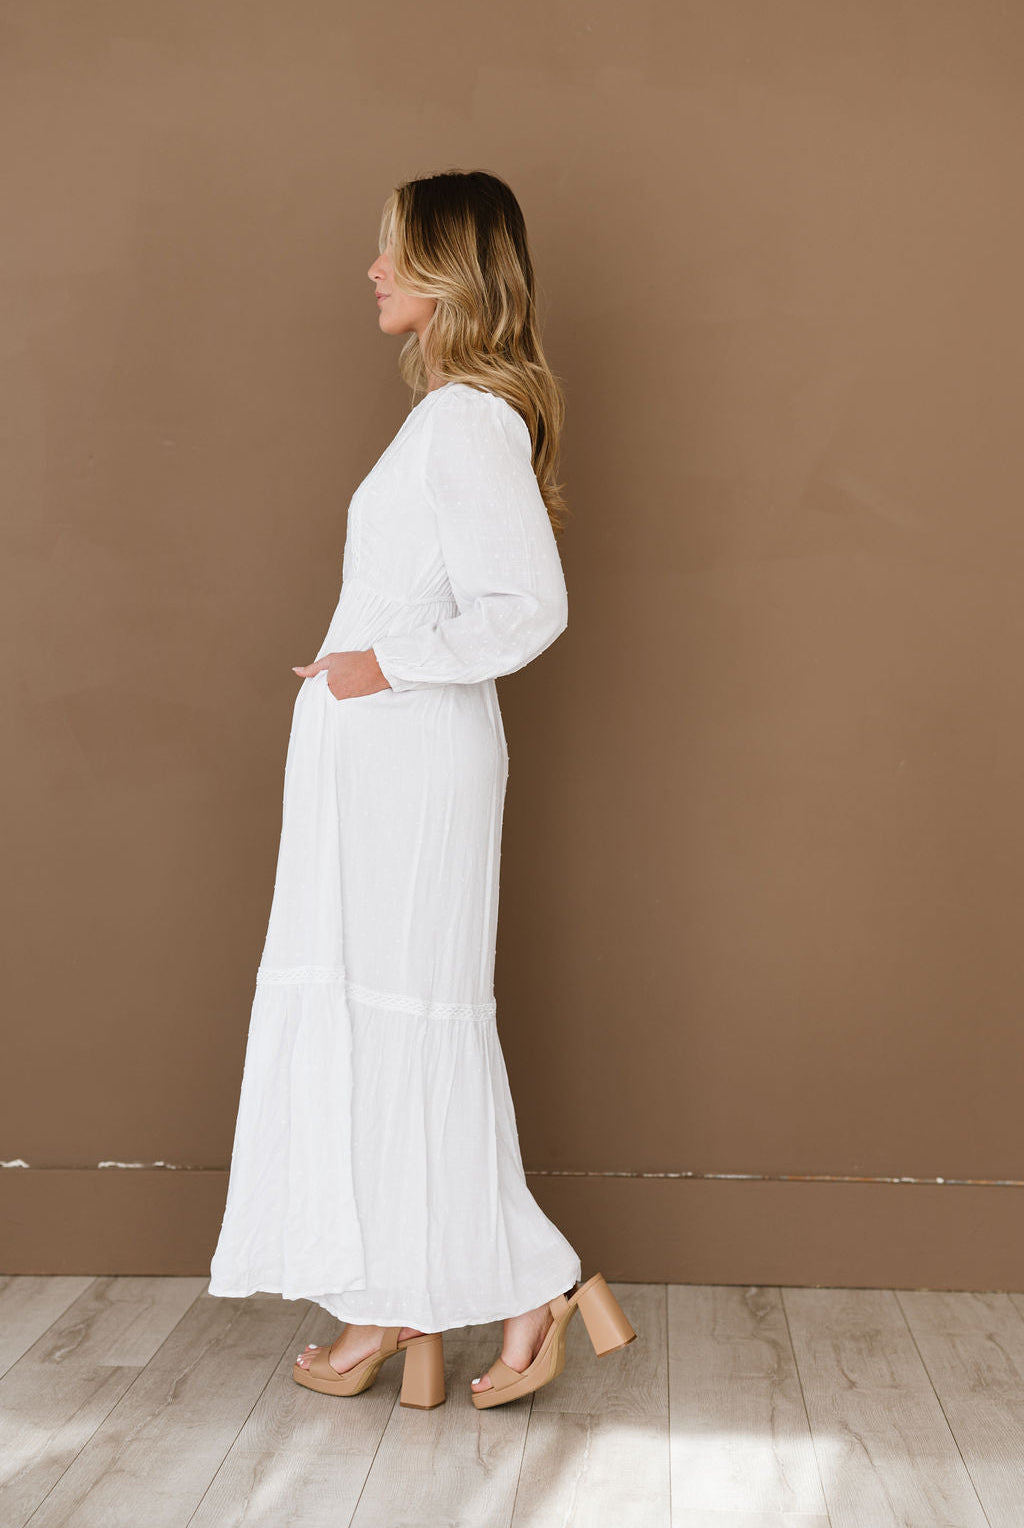 Elegant white Lds temple dress